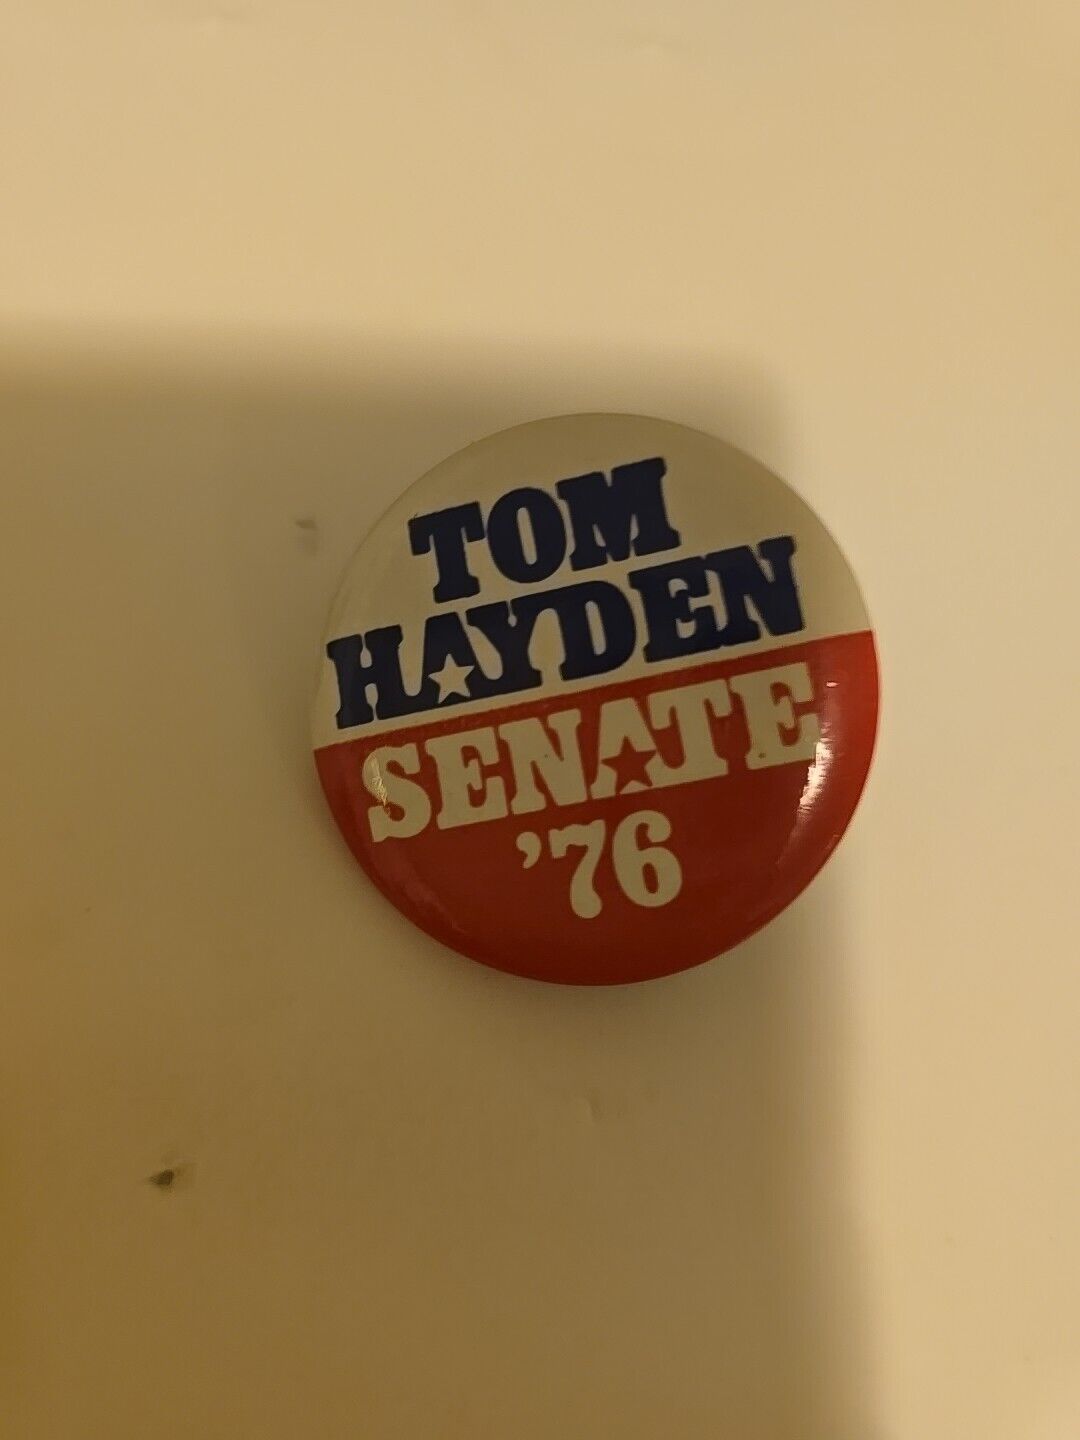 Tom Hayden Senate \'76 Calif Political Campaign Collectors Pin Button Vintage 